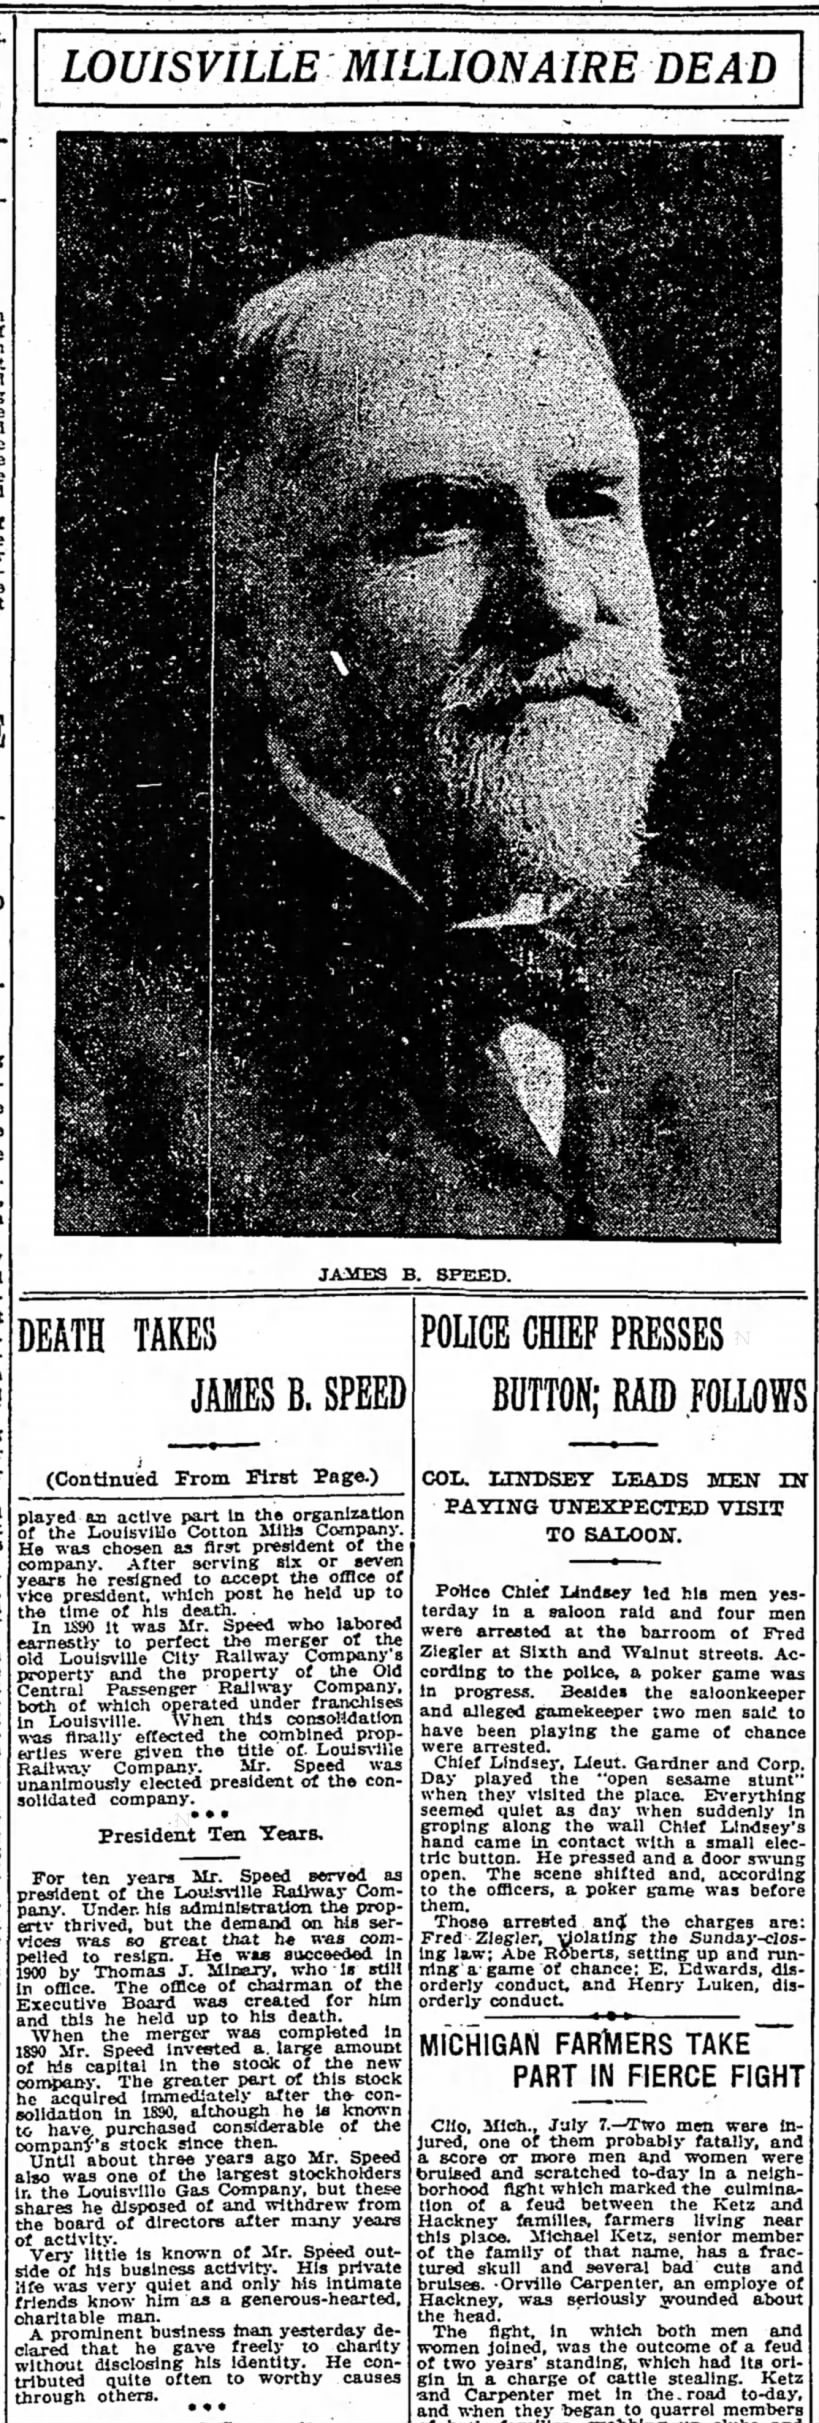 Louisville Millionaire Dead; 8 Jul 1912; The Courier-Journal; 5